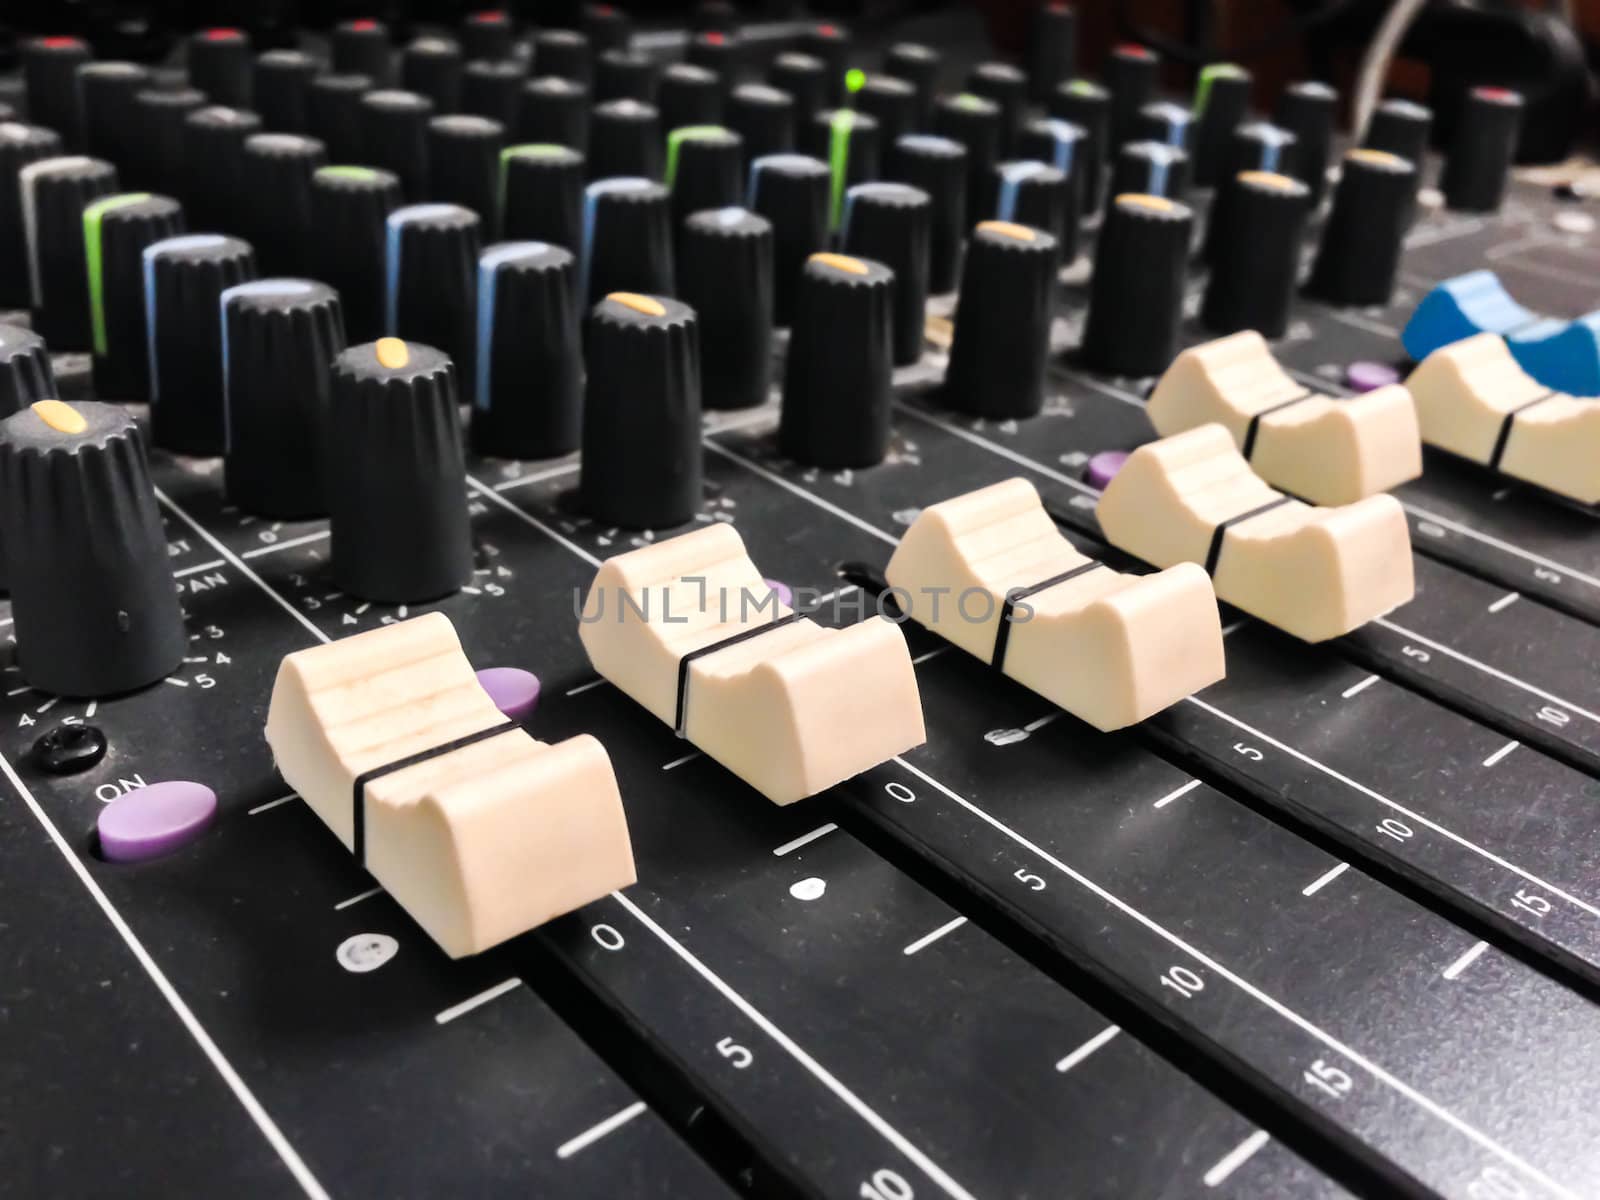 Electronic sound mixer equipment close-up by wmitrmatr